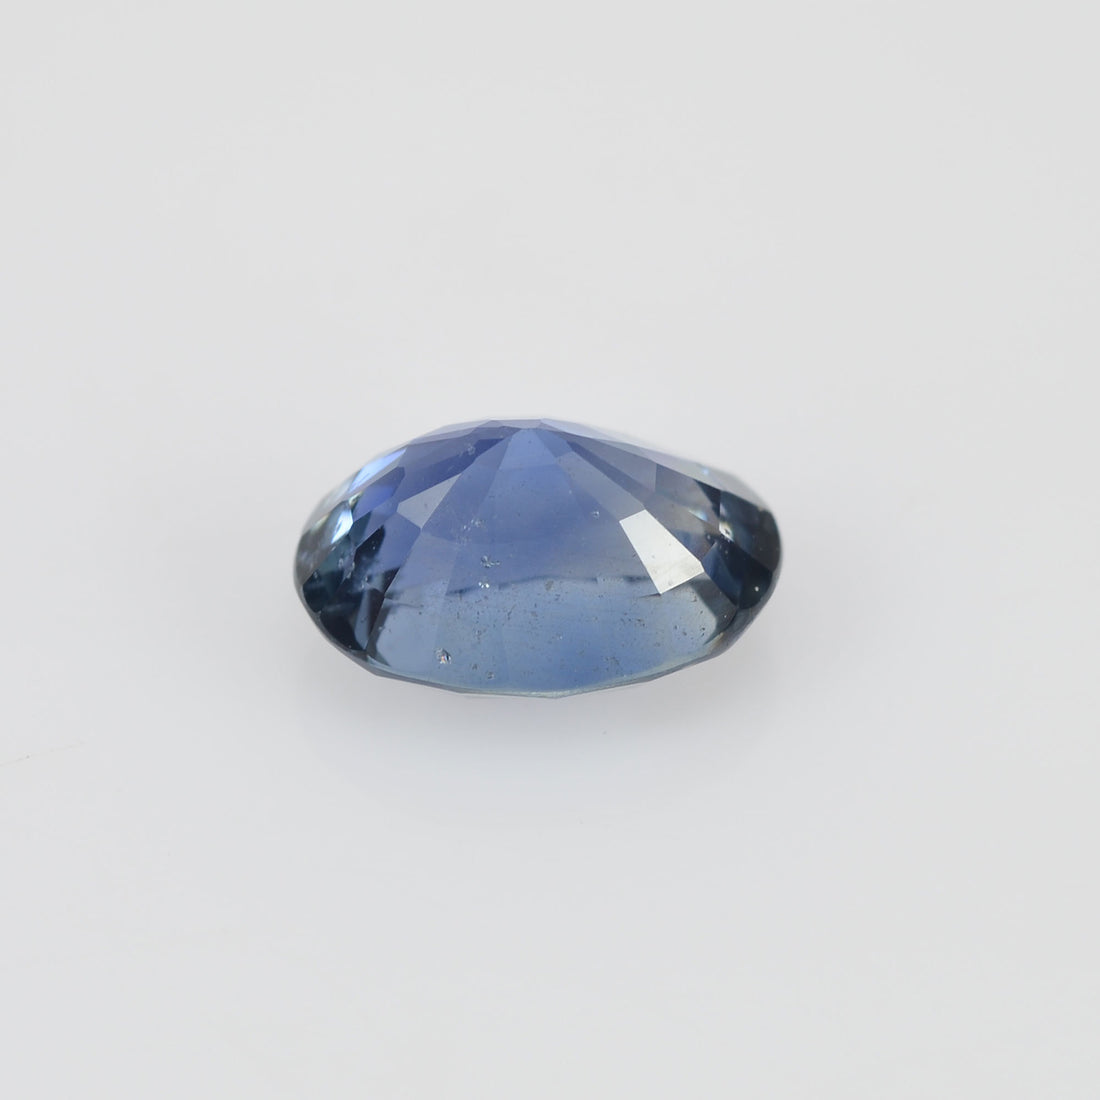 1.83 Cts Natural Blue Sapphire Loose Gemstone Oval Cut - Thai Gems Export Ltd.